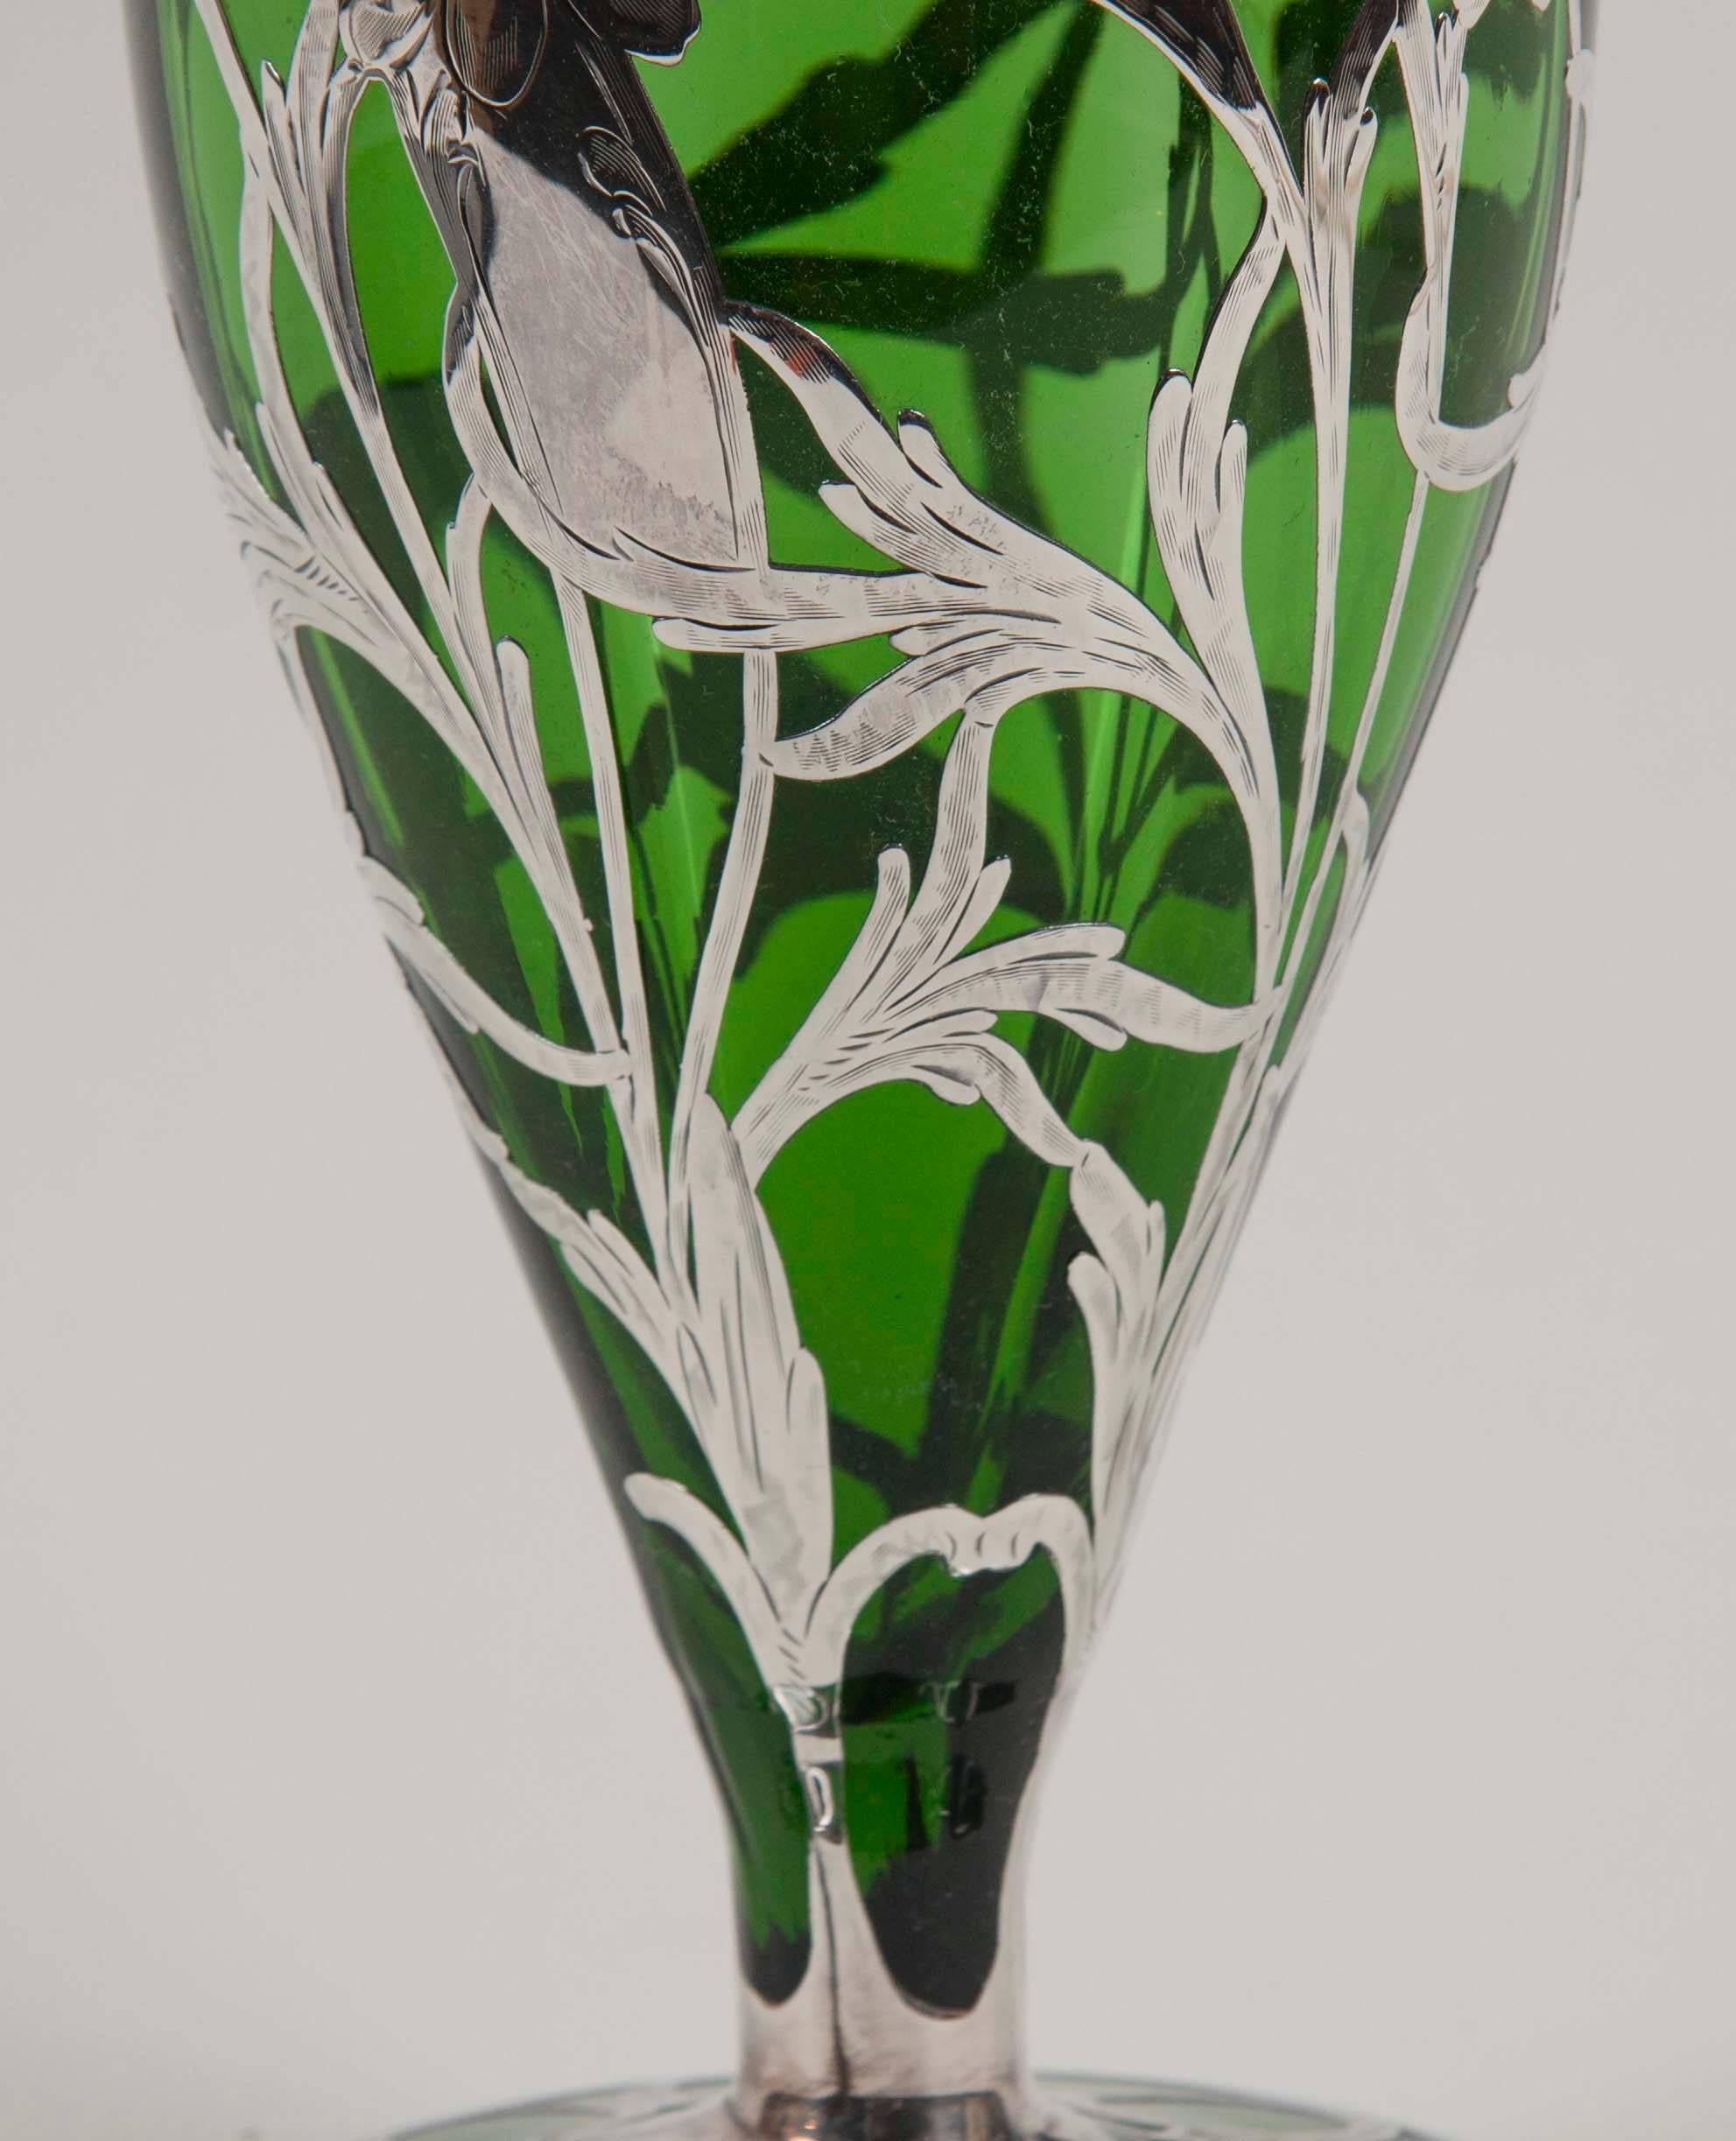 Art Nouveau Alvin Sterling Over Green Glass Vase For Sale At 1stdibs